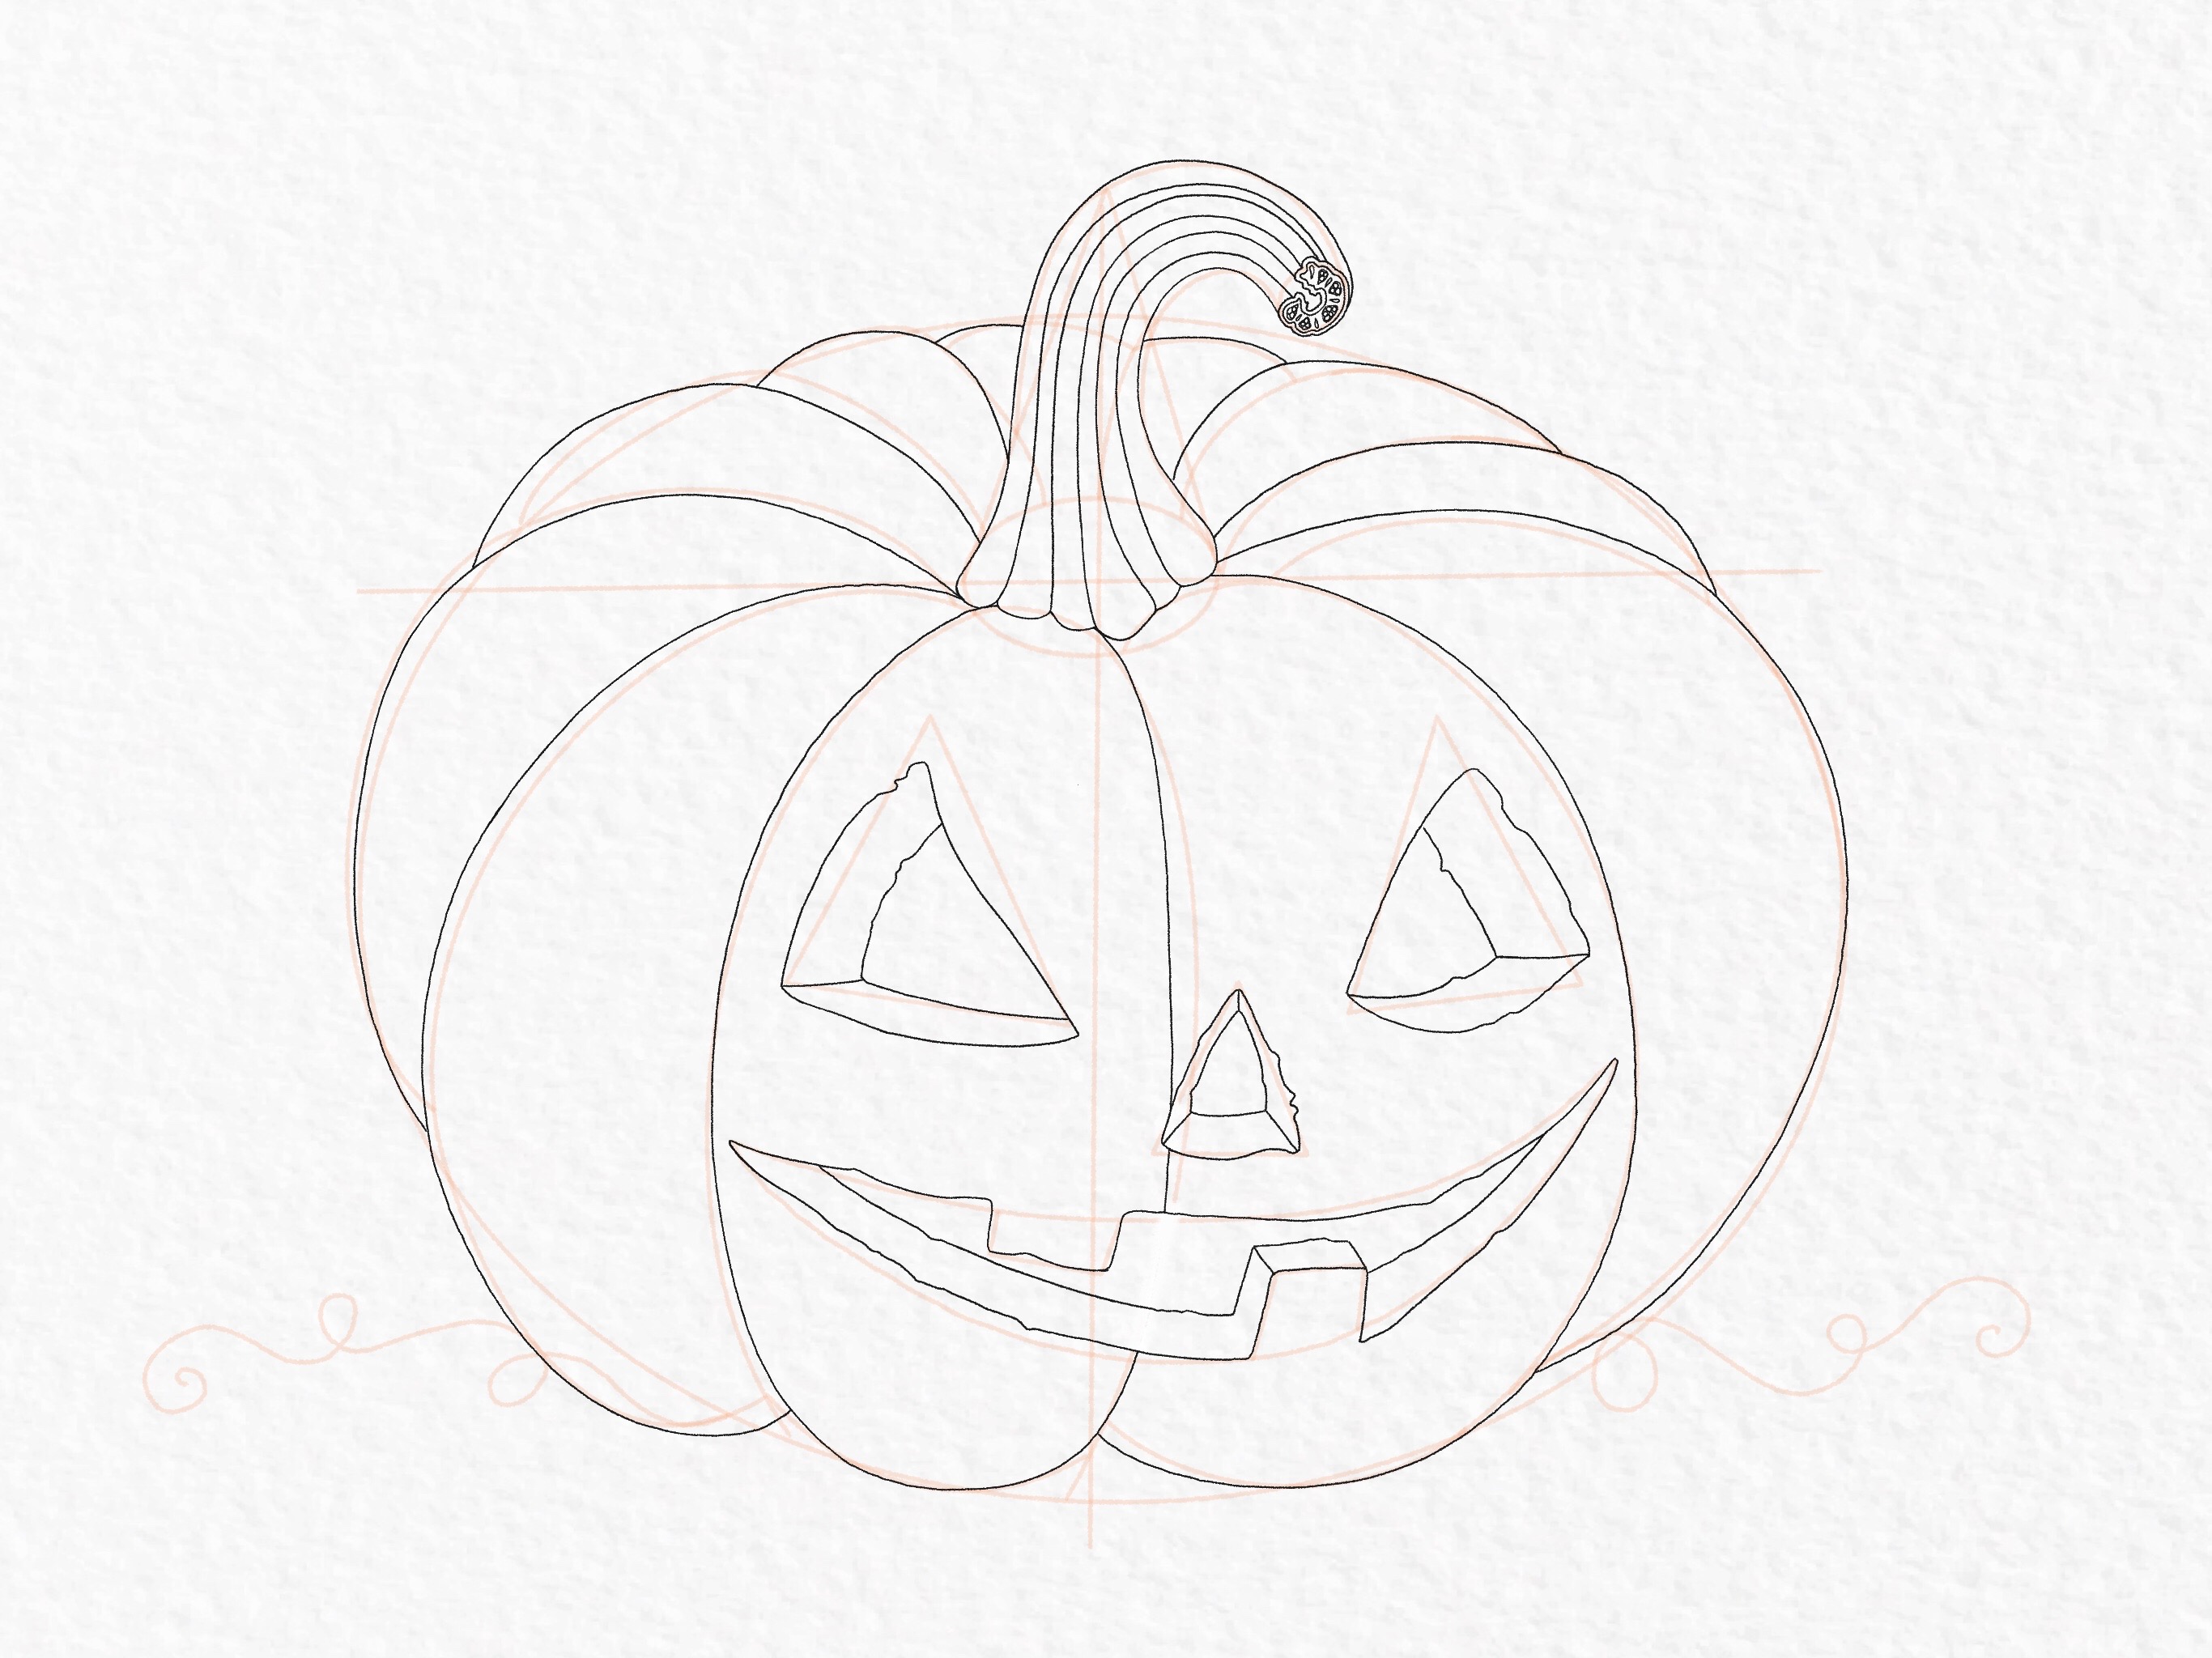 Pumpkin drawing tutorial, step 26